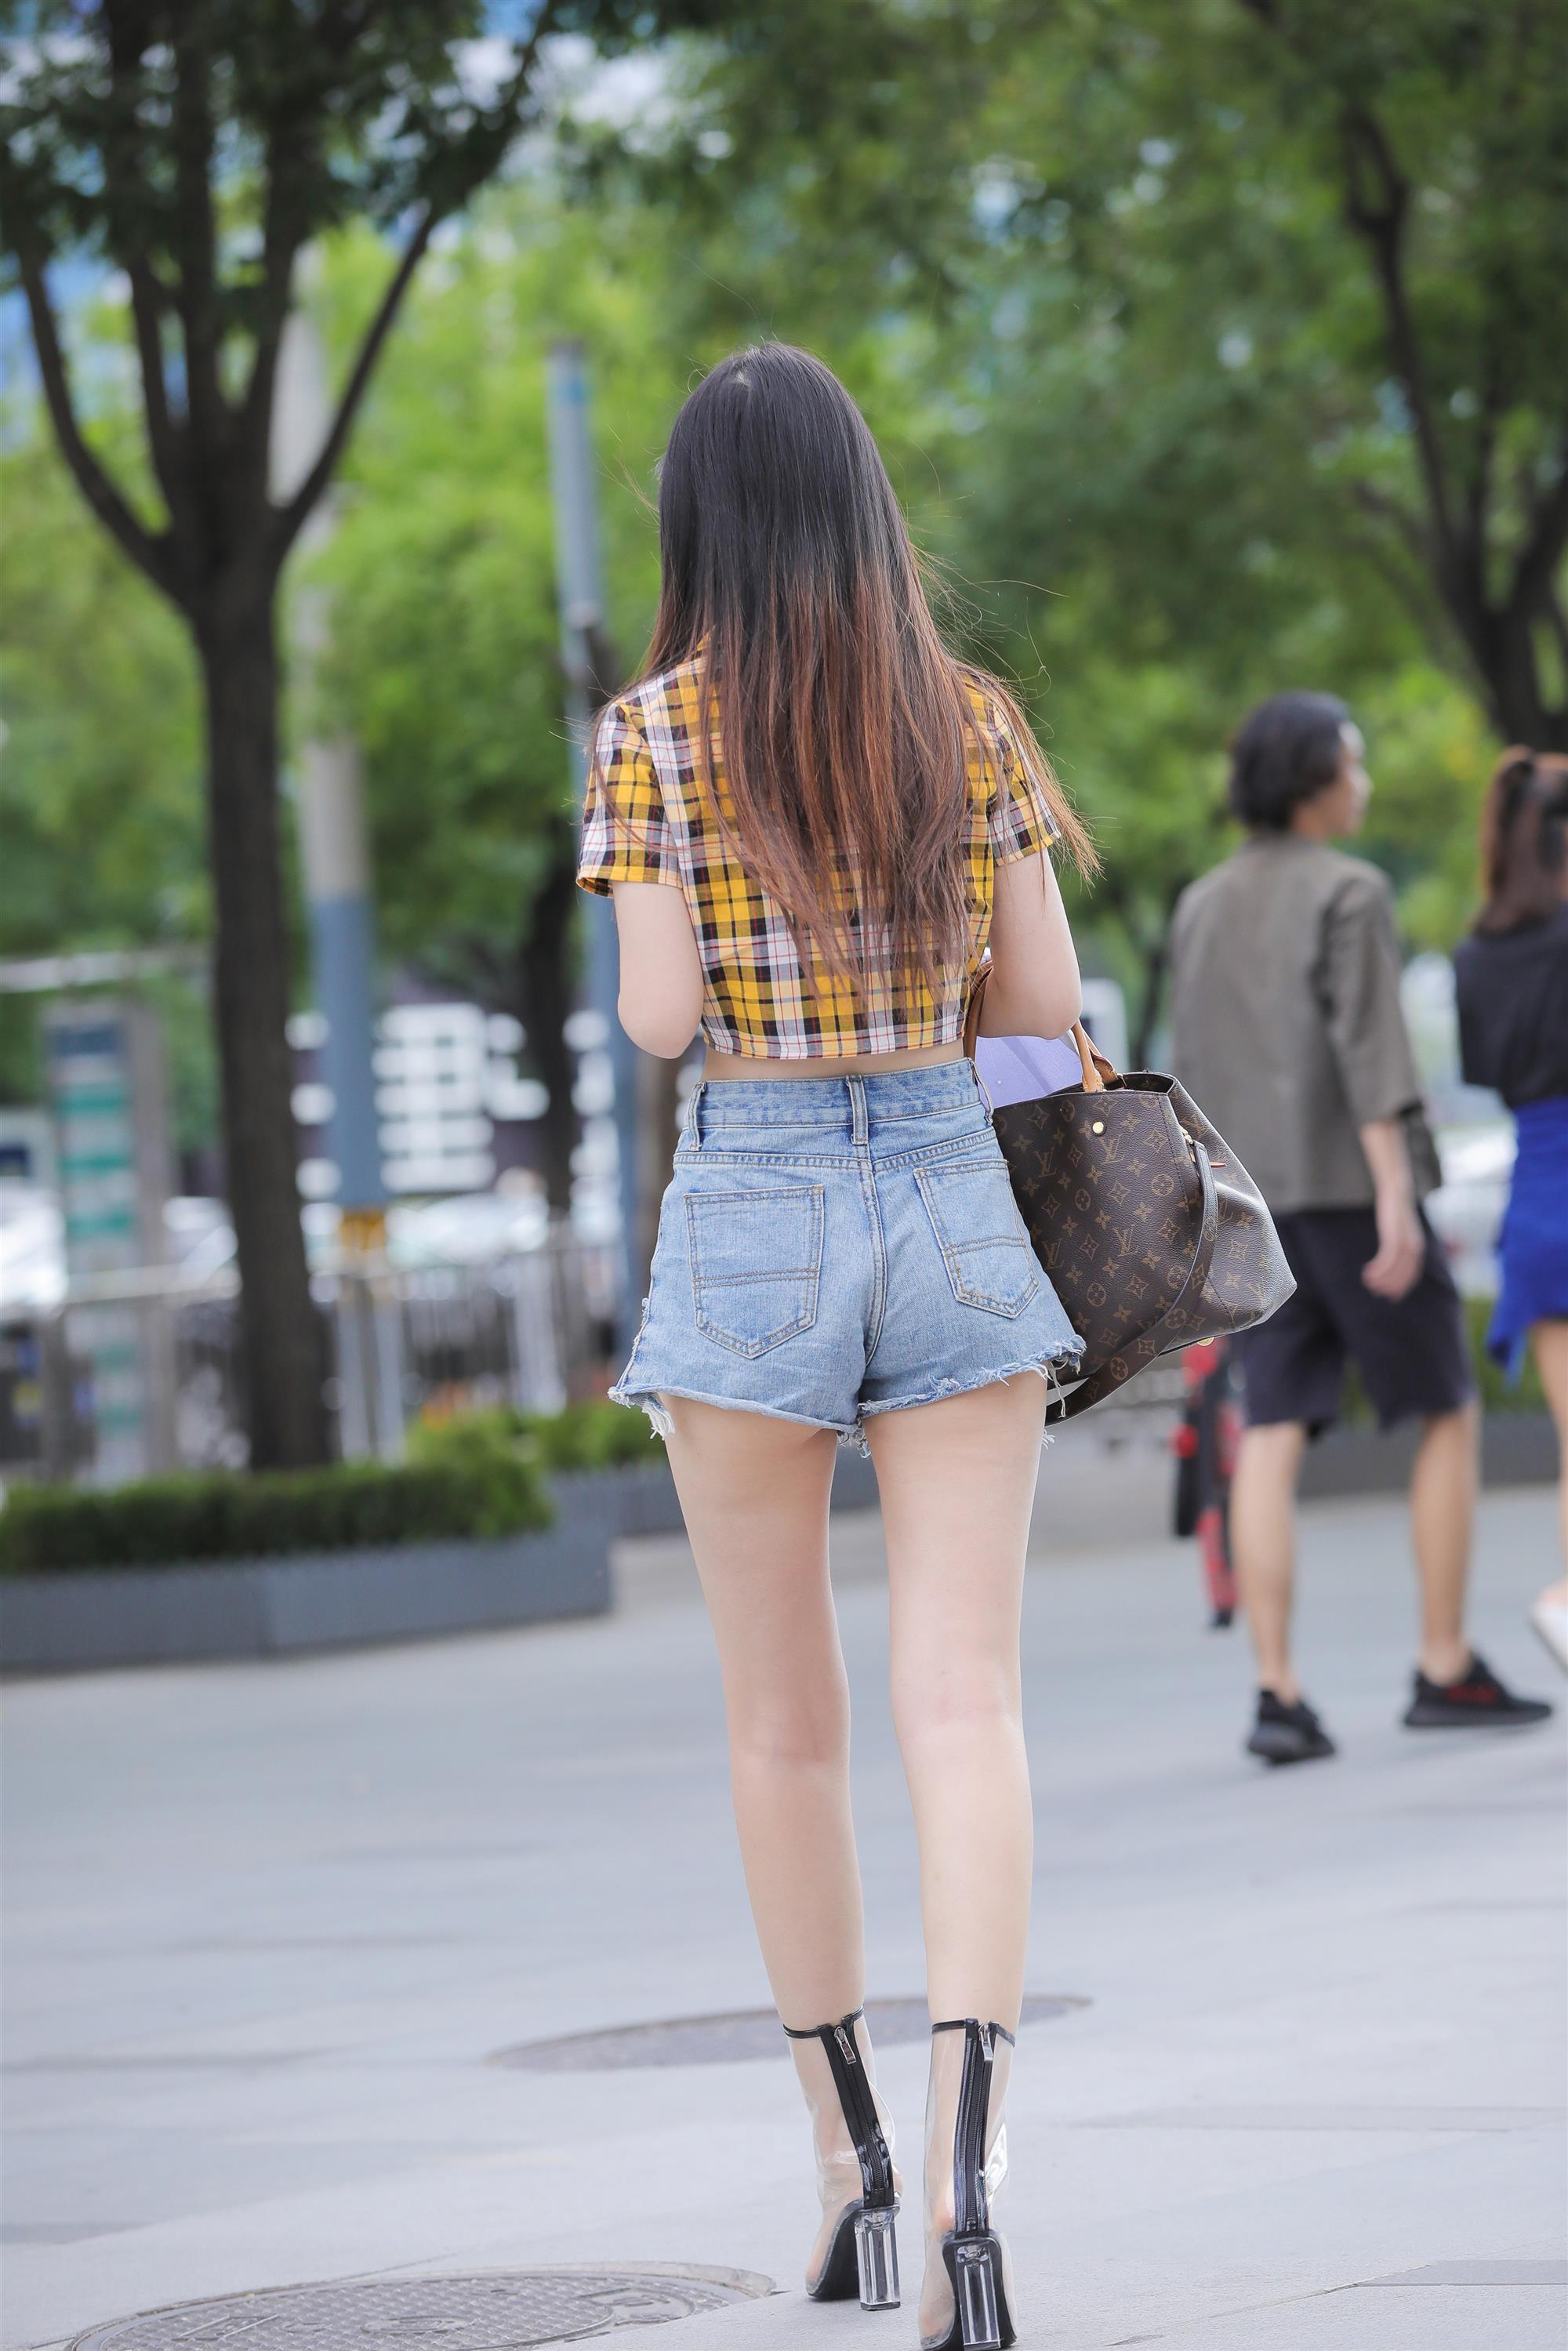 Street Denim shorts and high heels - 58.jpg